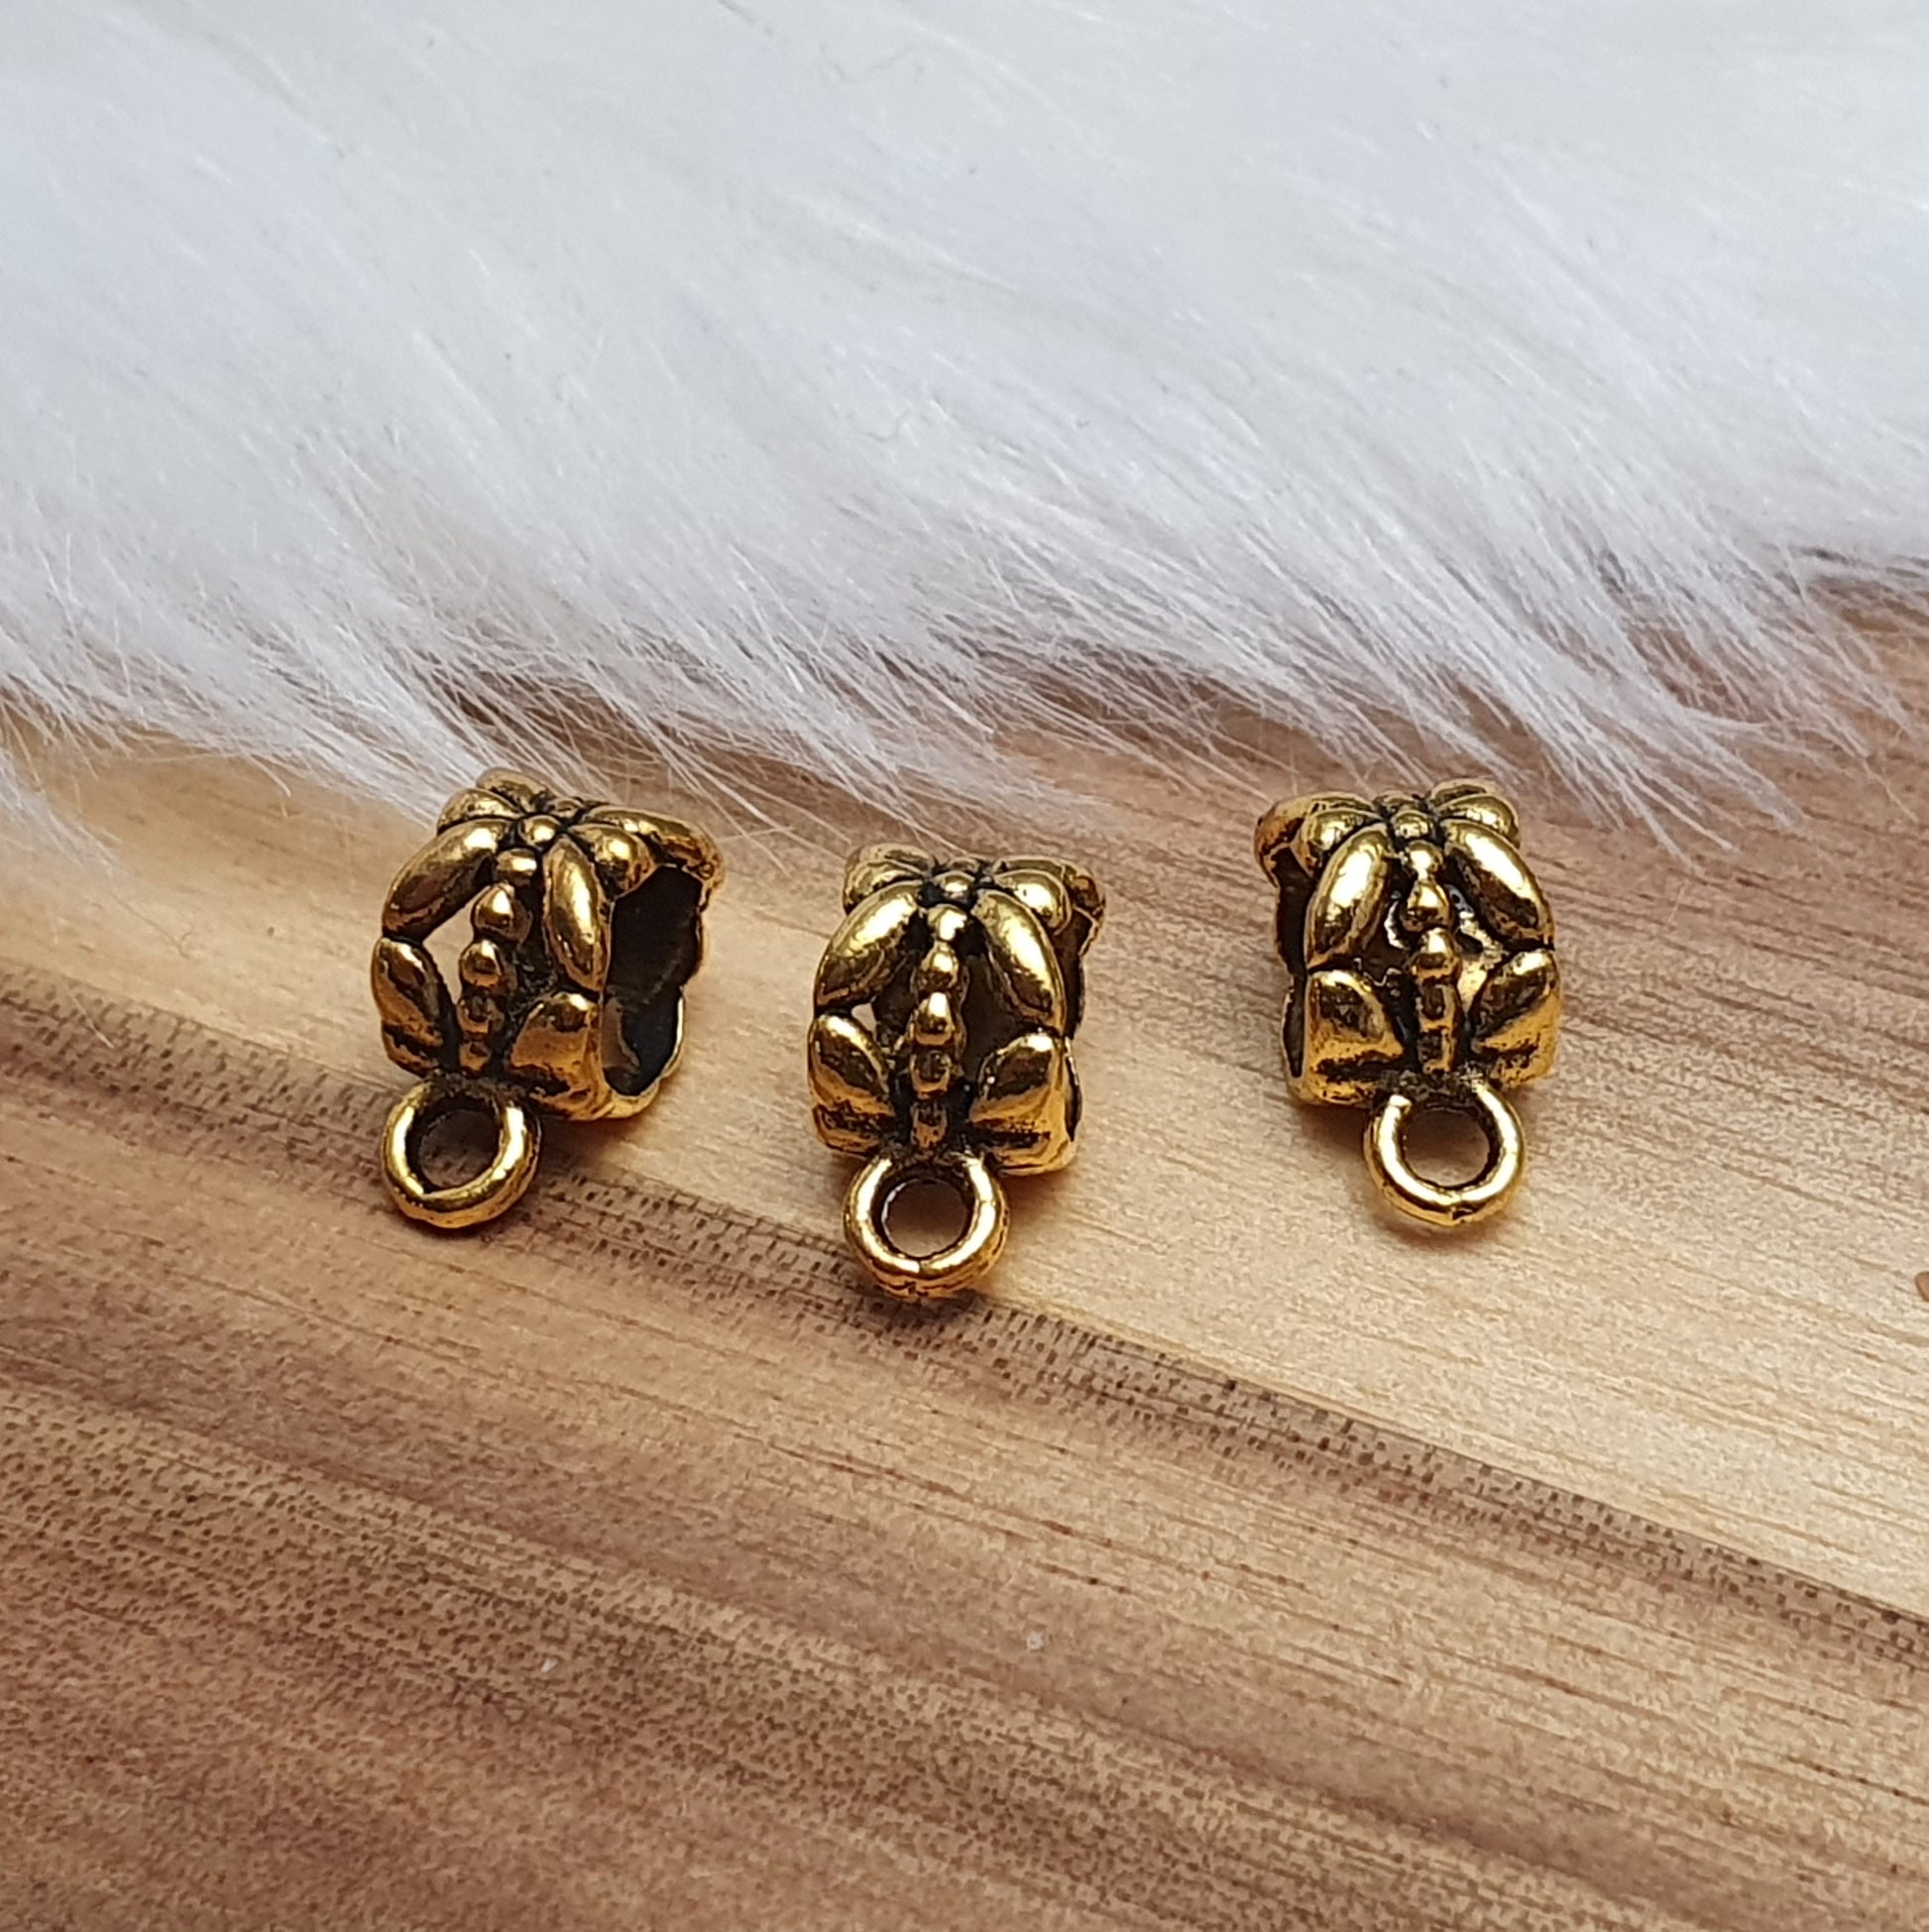 6 Perlen mit Öse, Libelle, 12mm, antik goldfarbig, Schmuck Basteln